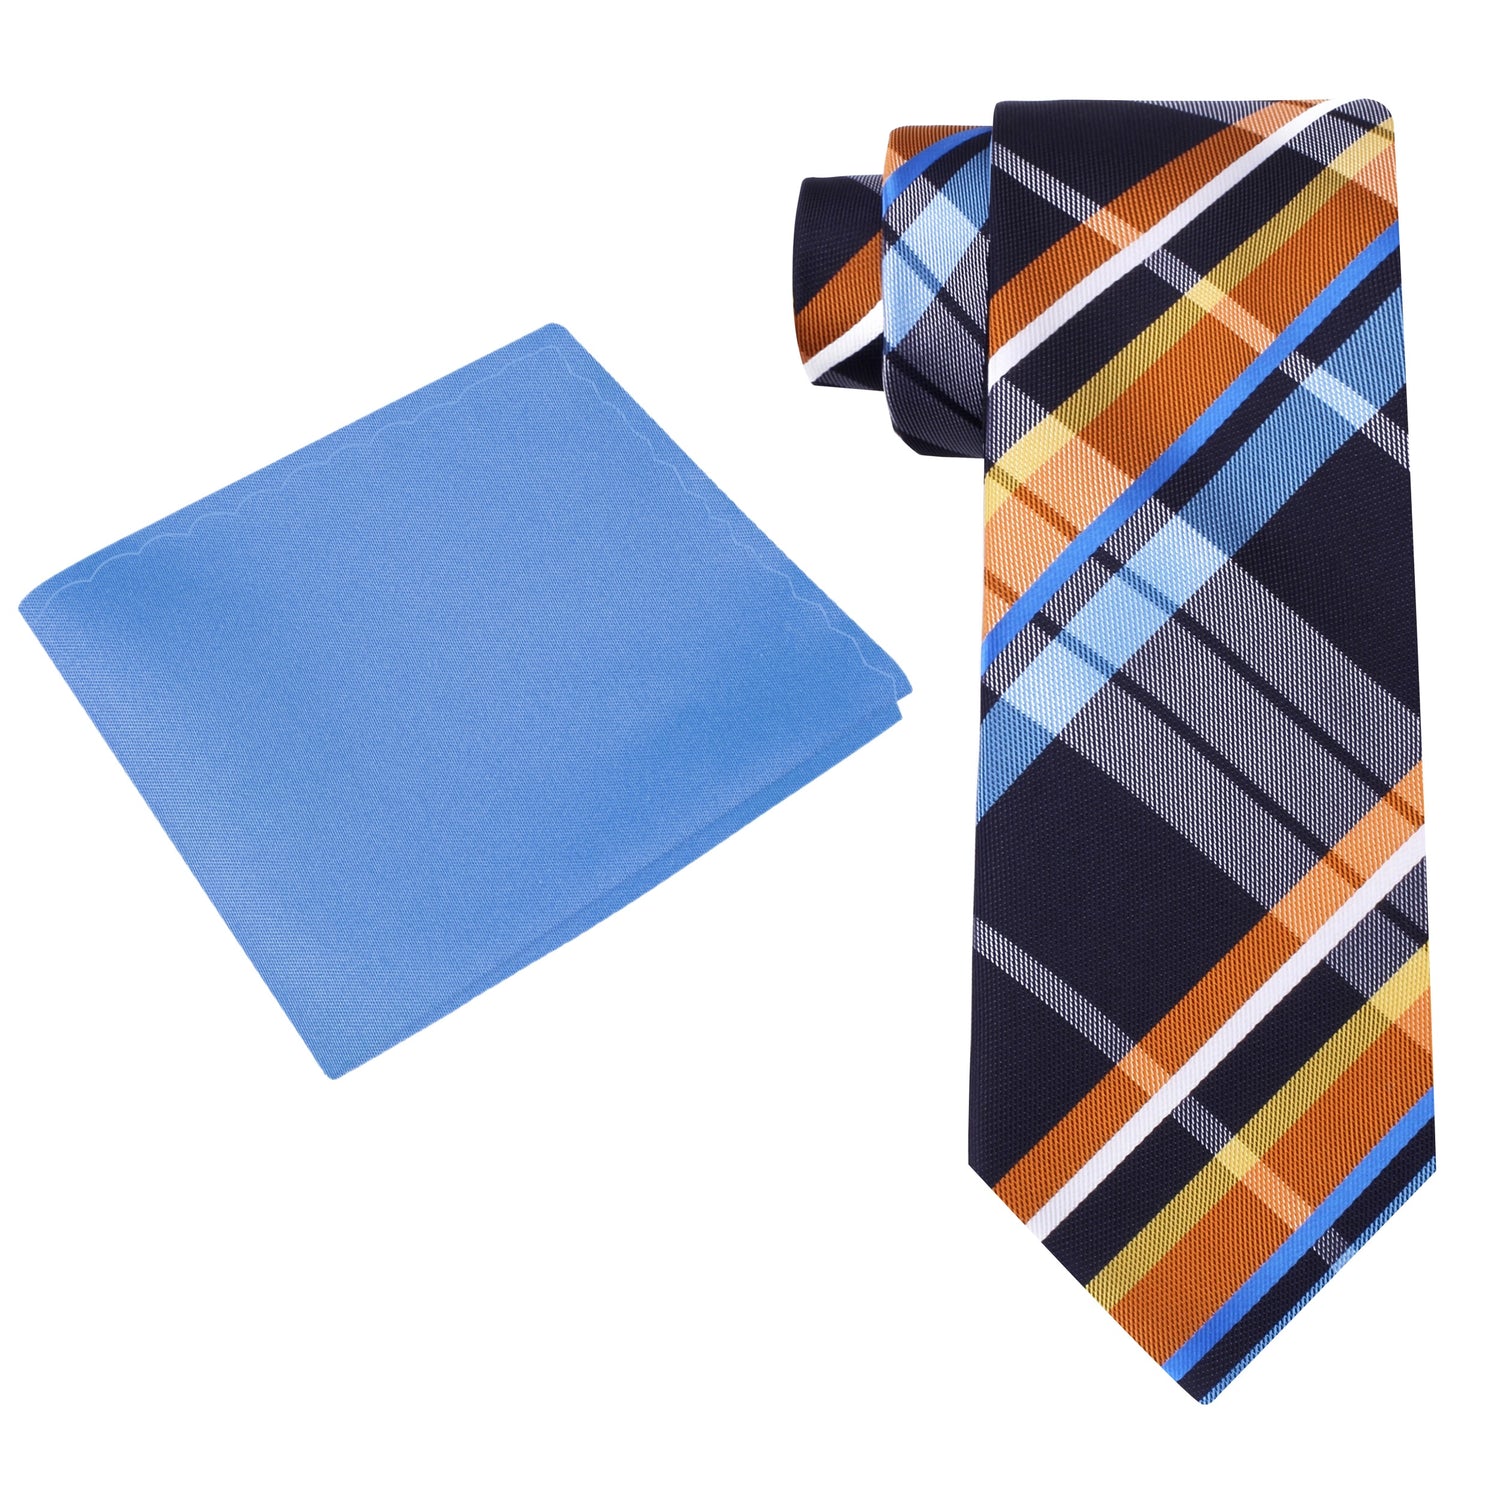 Alt View: Blue, Orange, White Plaid Necktie and Blue Square